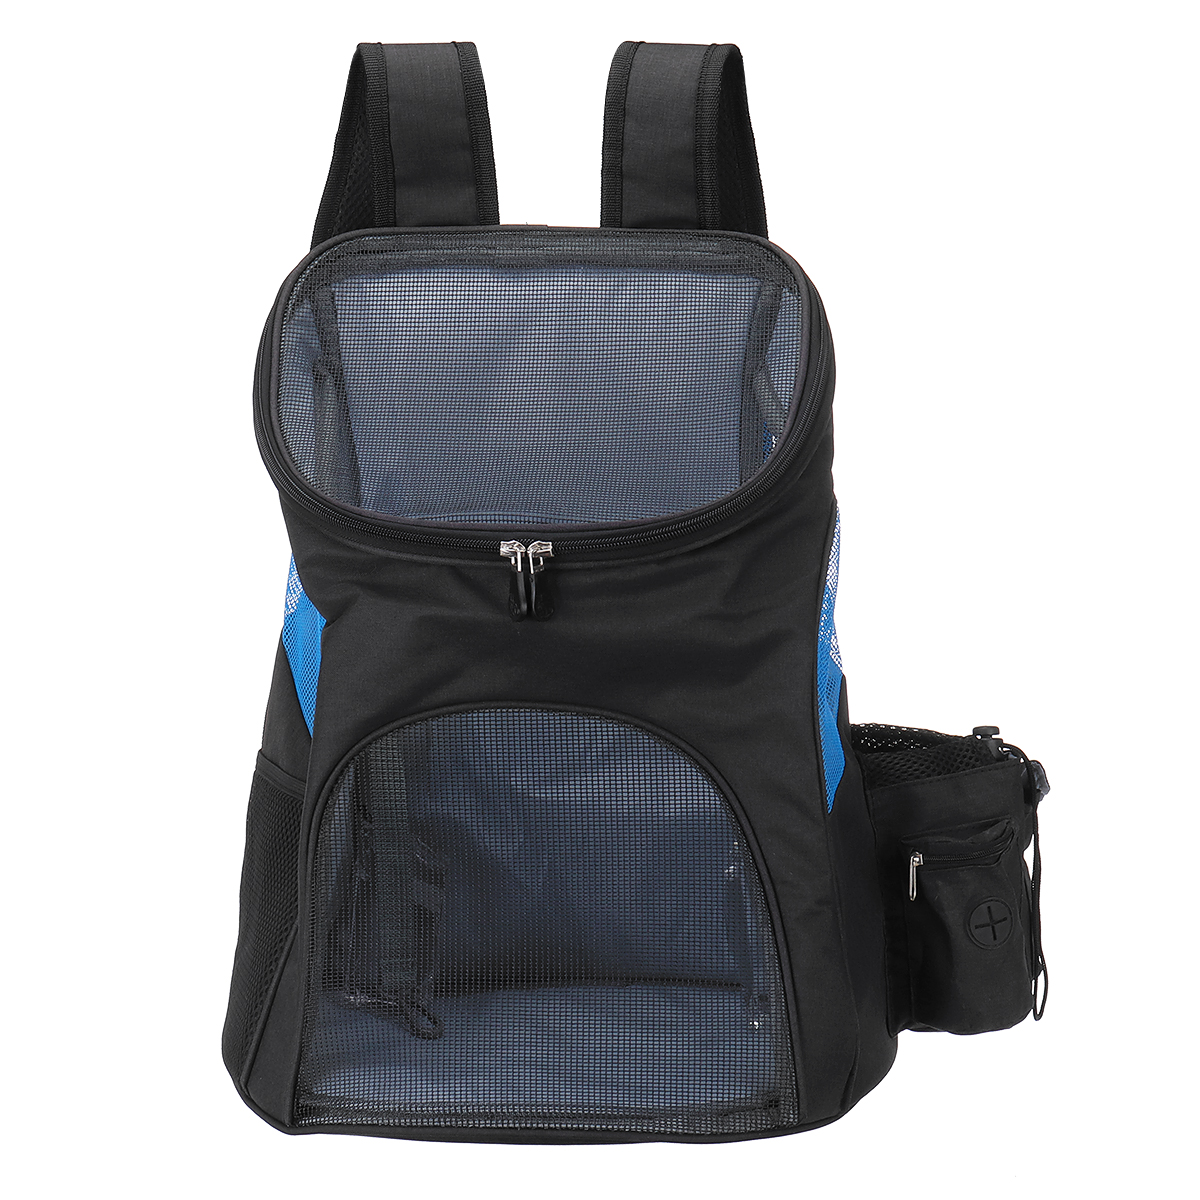 Outdoor-Pet-Carrying-Bag-Cat-Dog-Backpack-Folding-Pet-Supplies-Storage-Bag-Carrier-1858921-2